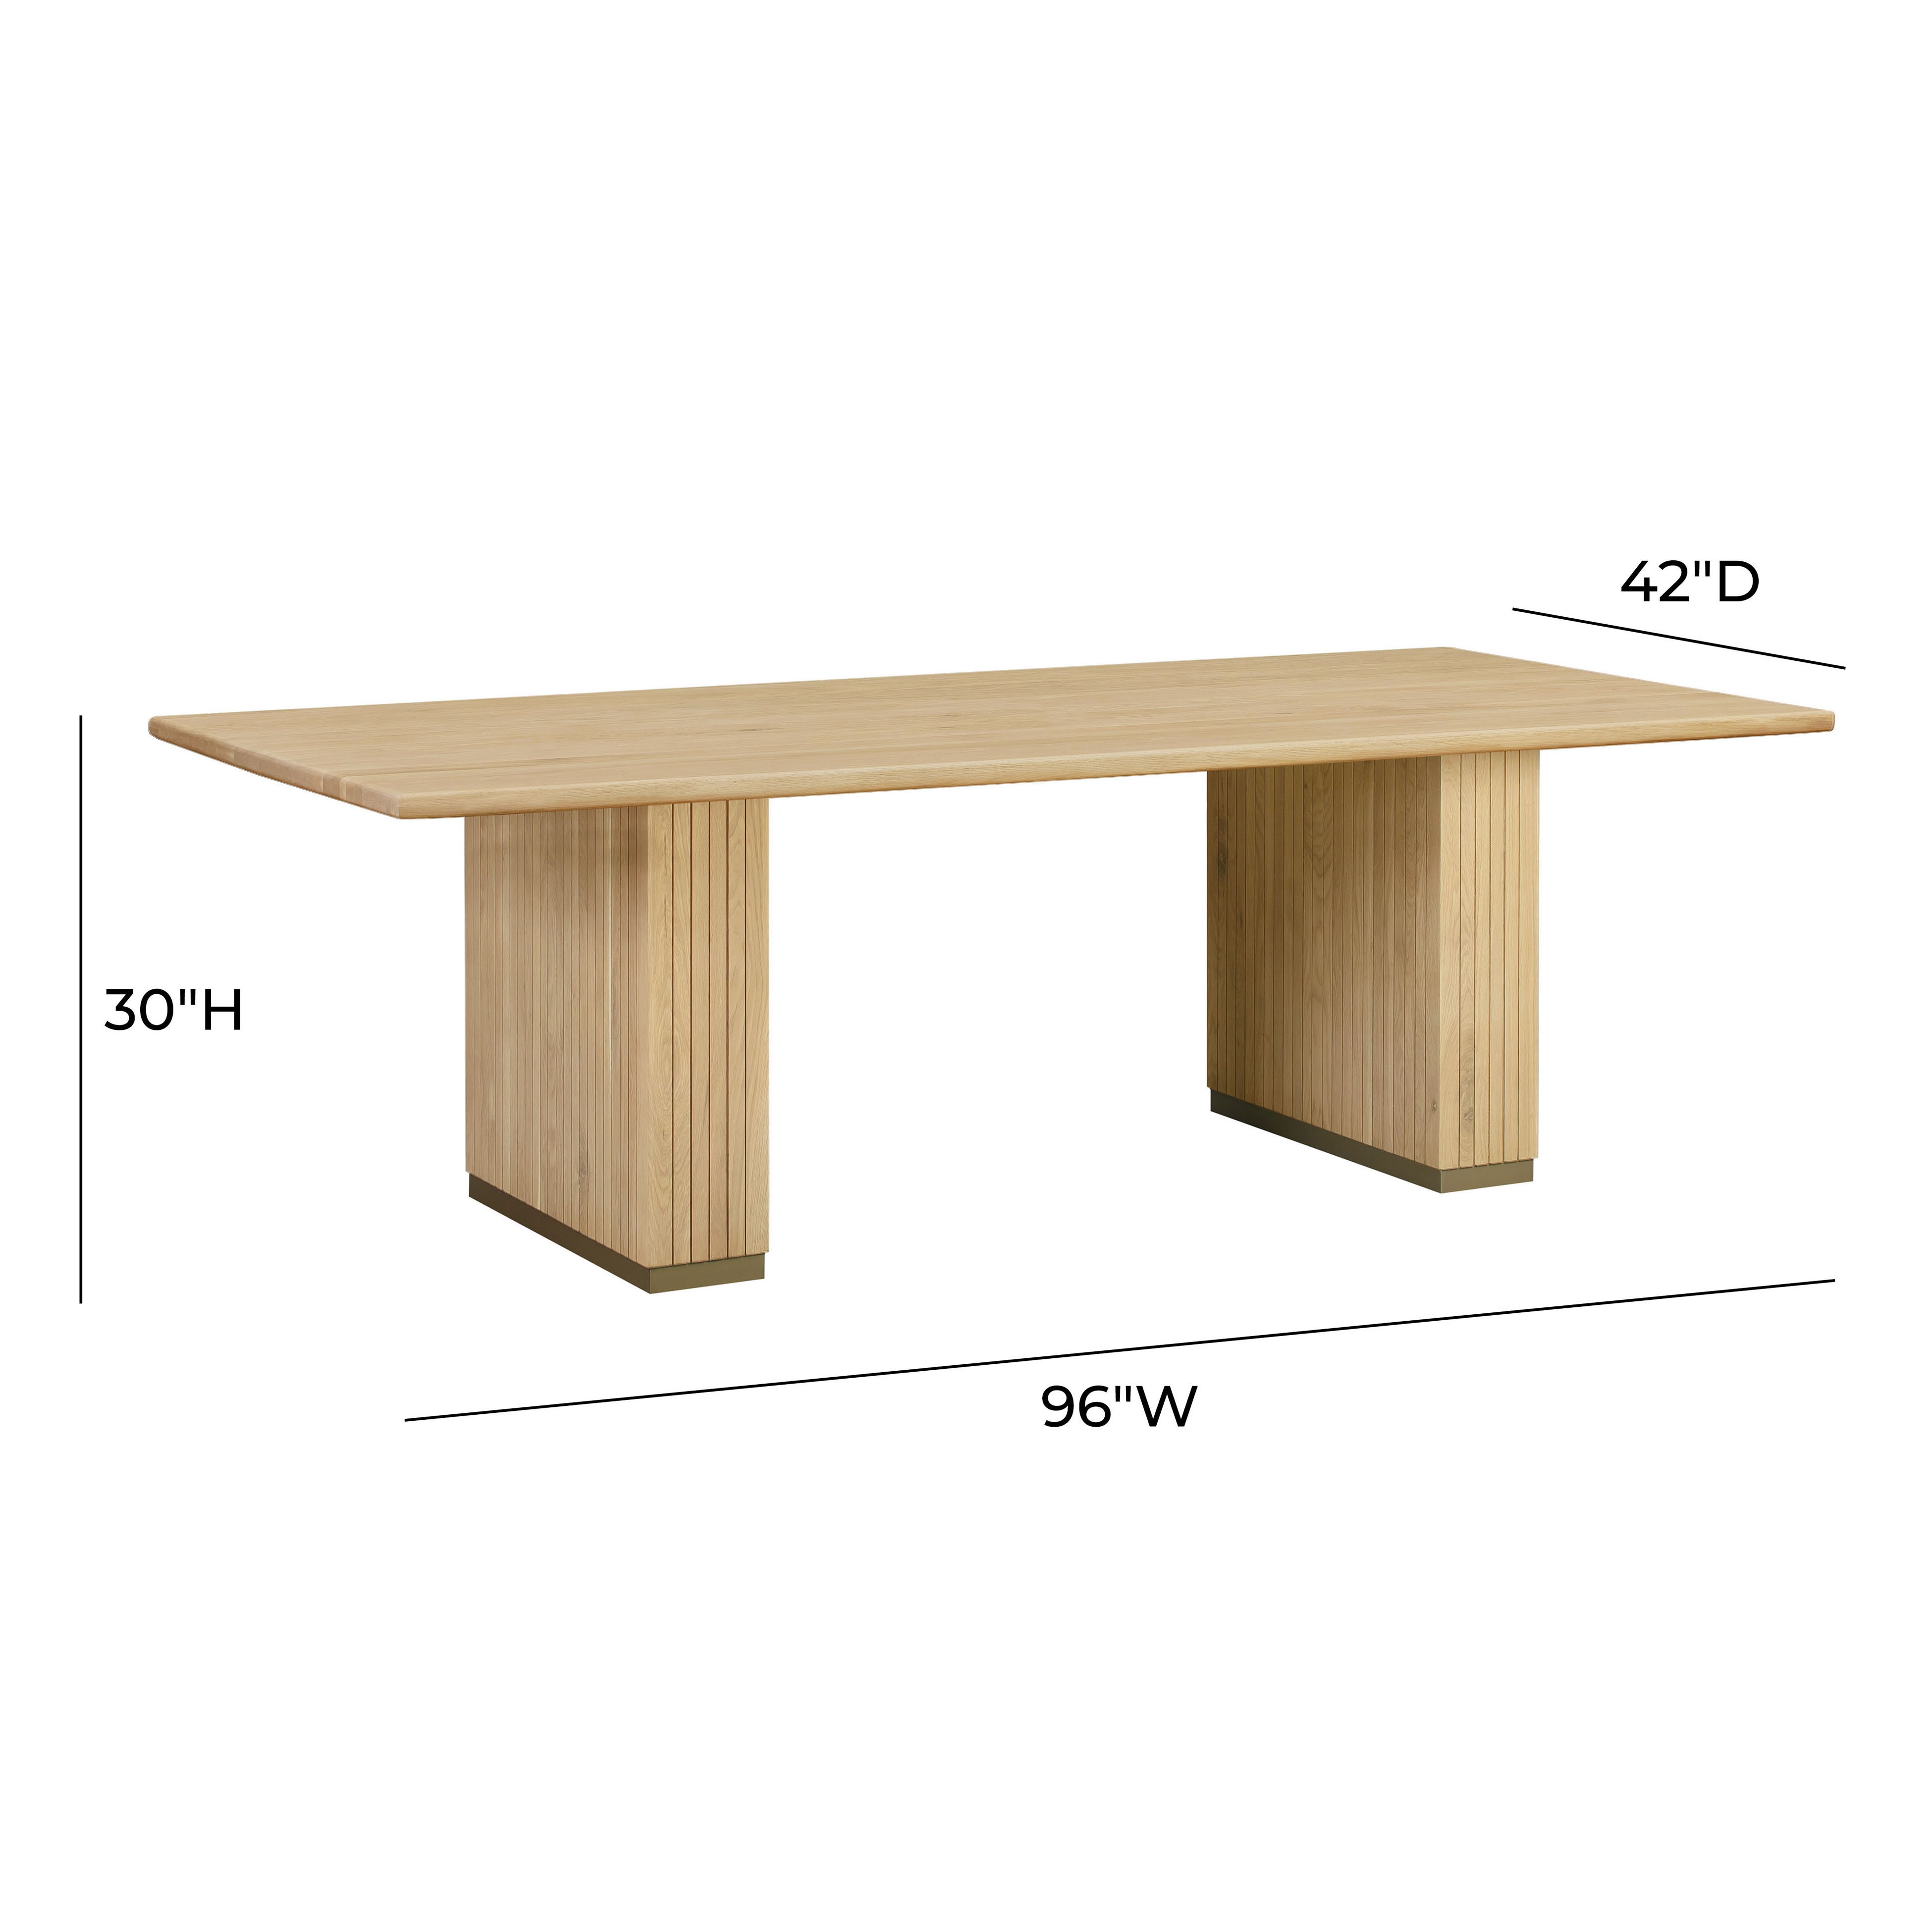 Chelsea Natural Oak Wood Rectangular Dining Table - Image 5